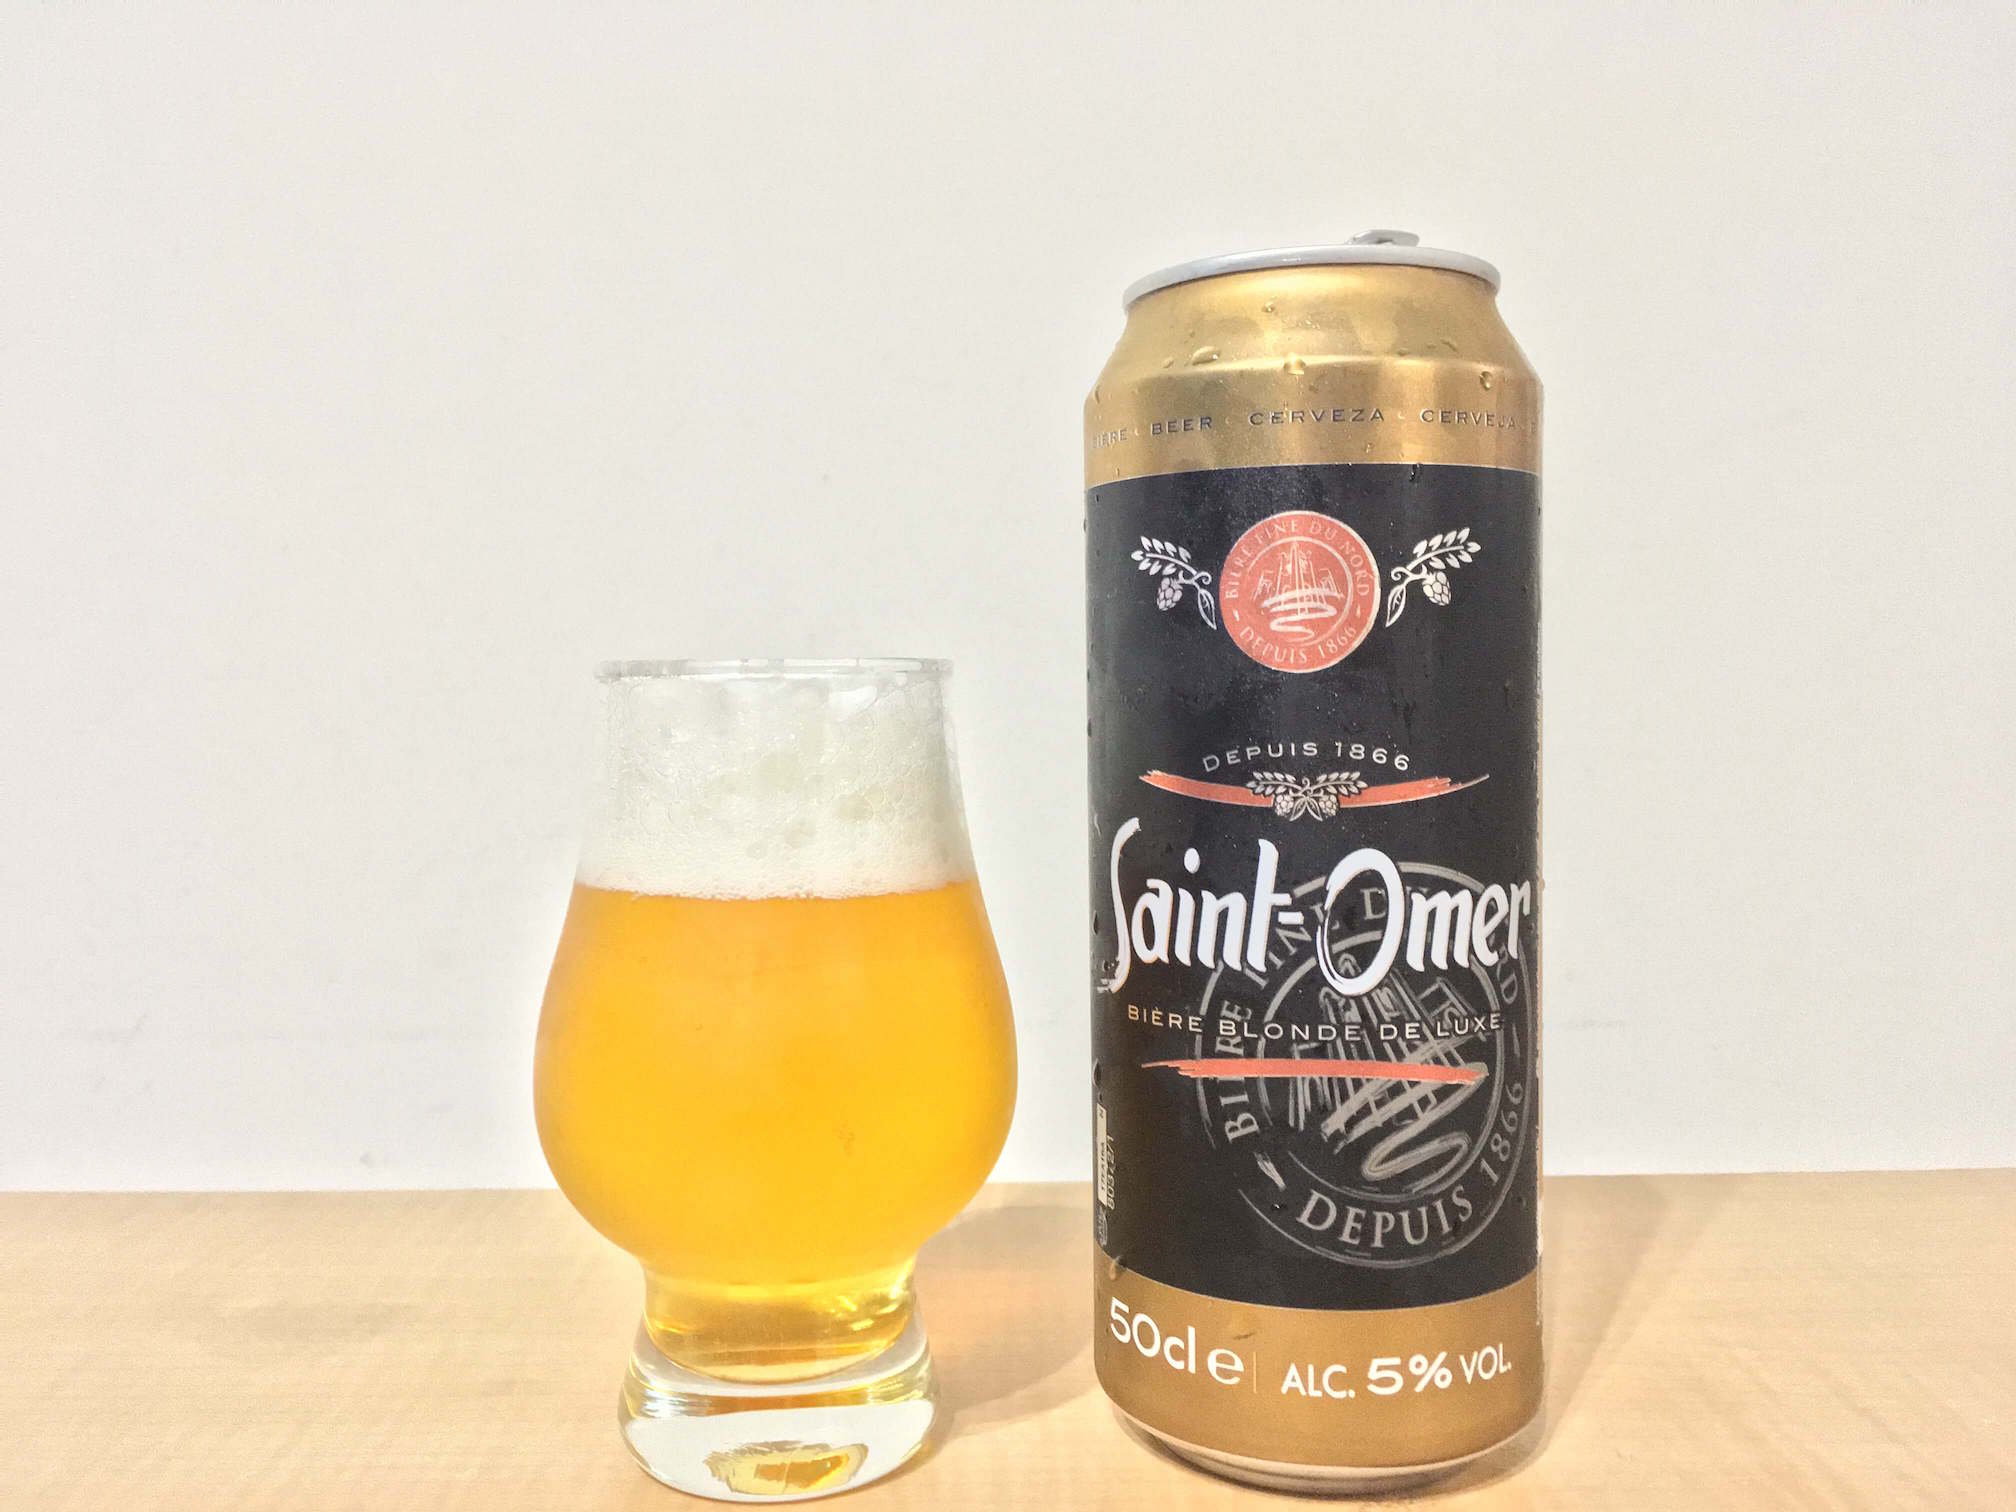 @Saint-Omer Bière Blonde de Luxe